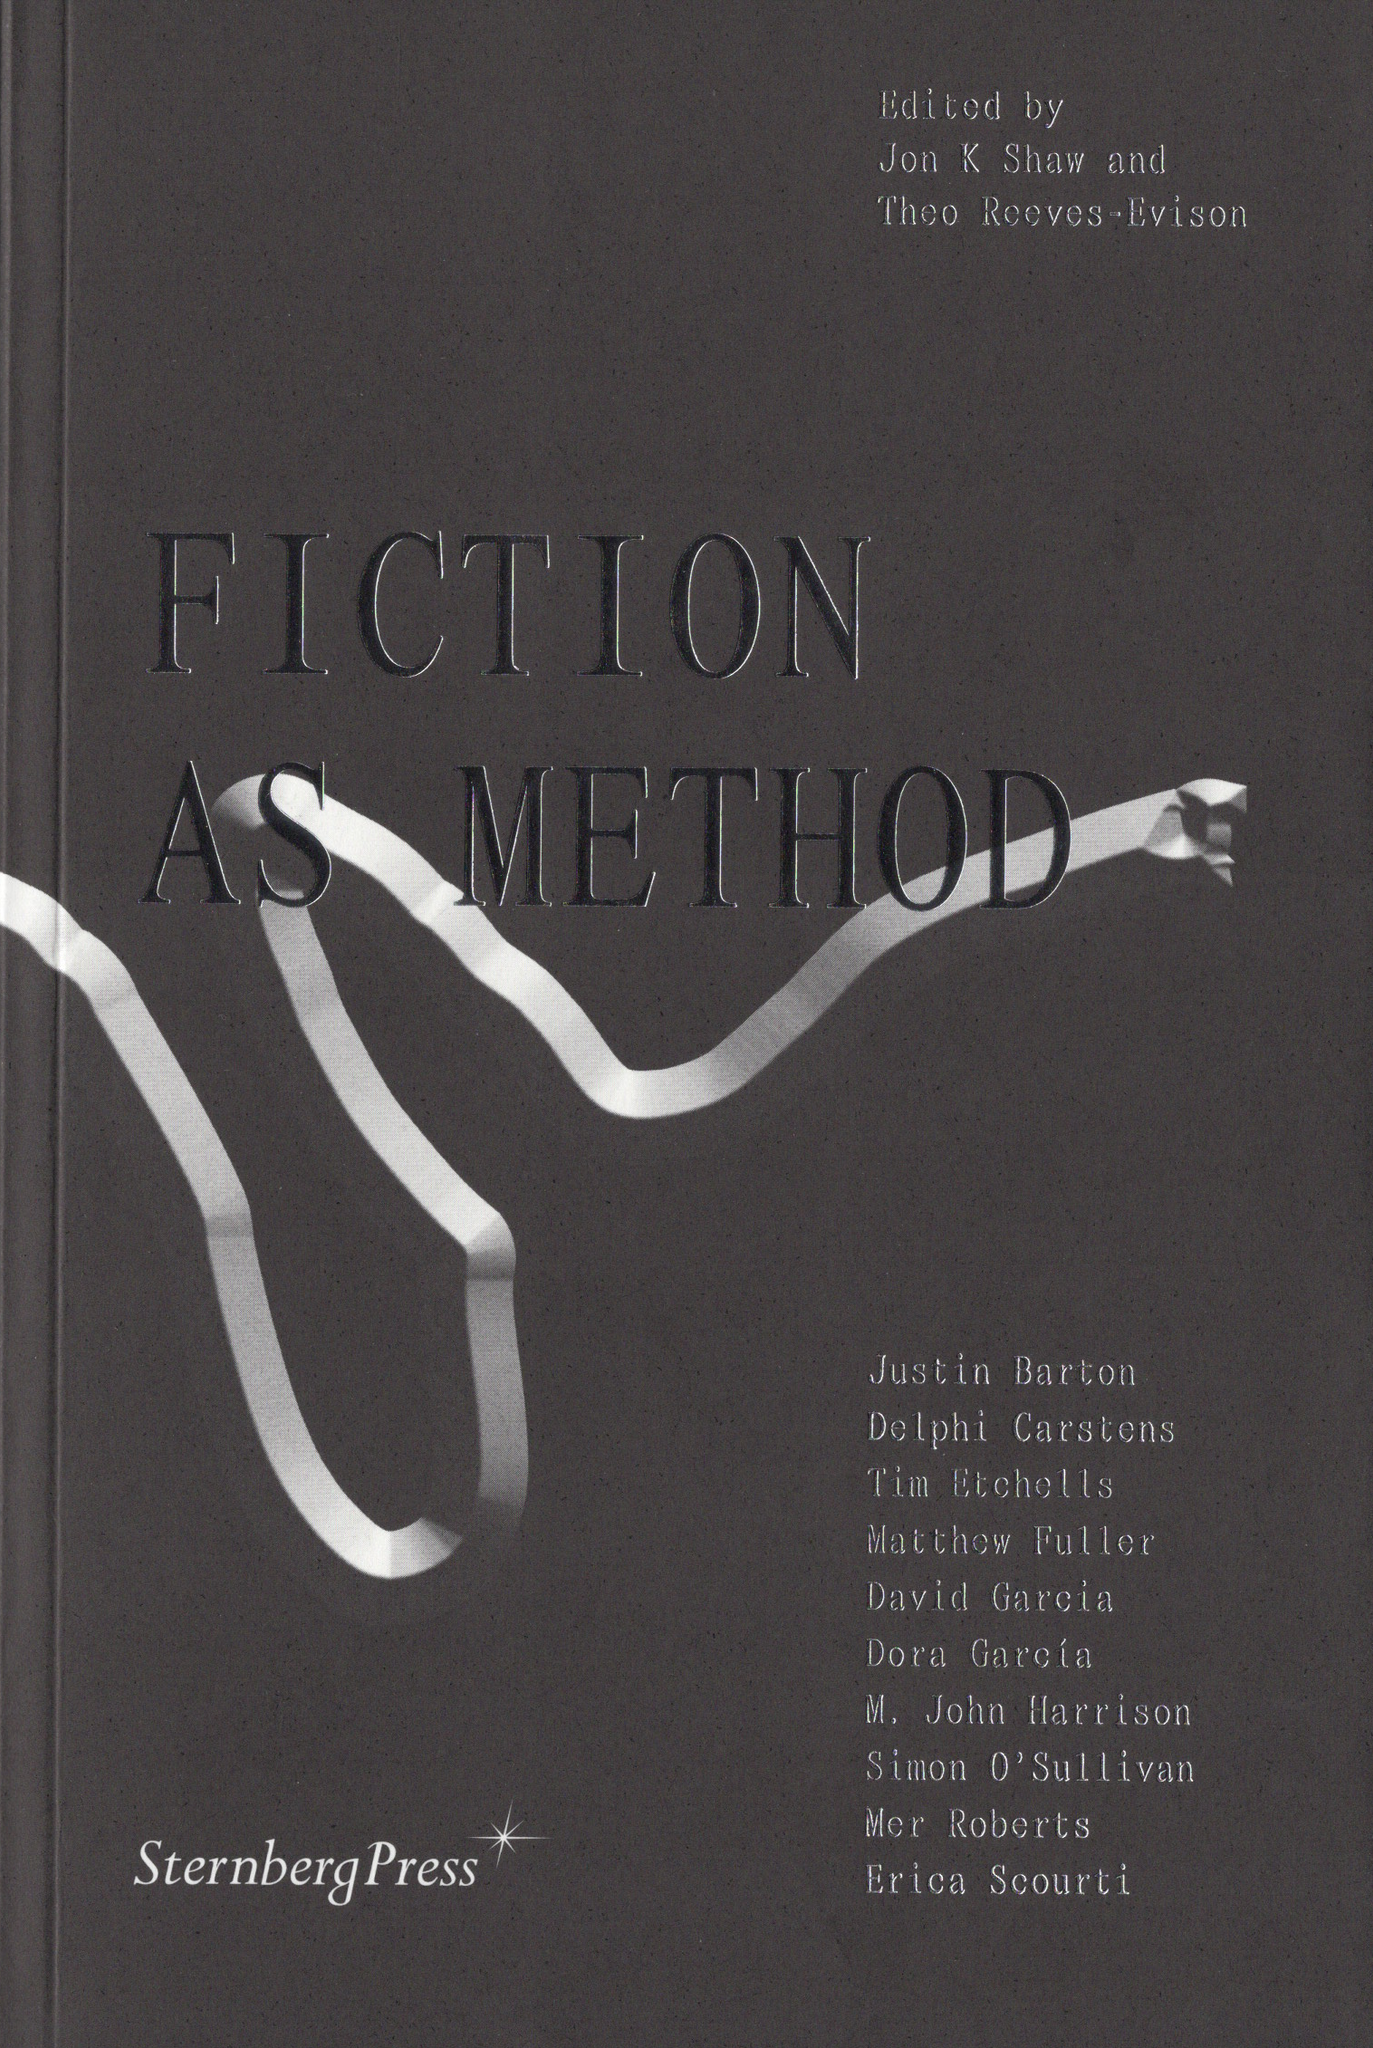 Fiction as Method, Theo Reeves-Evison, Jon K Shaw